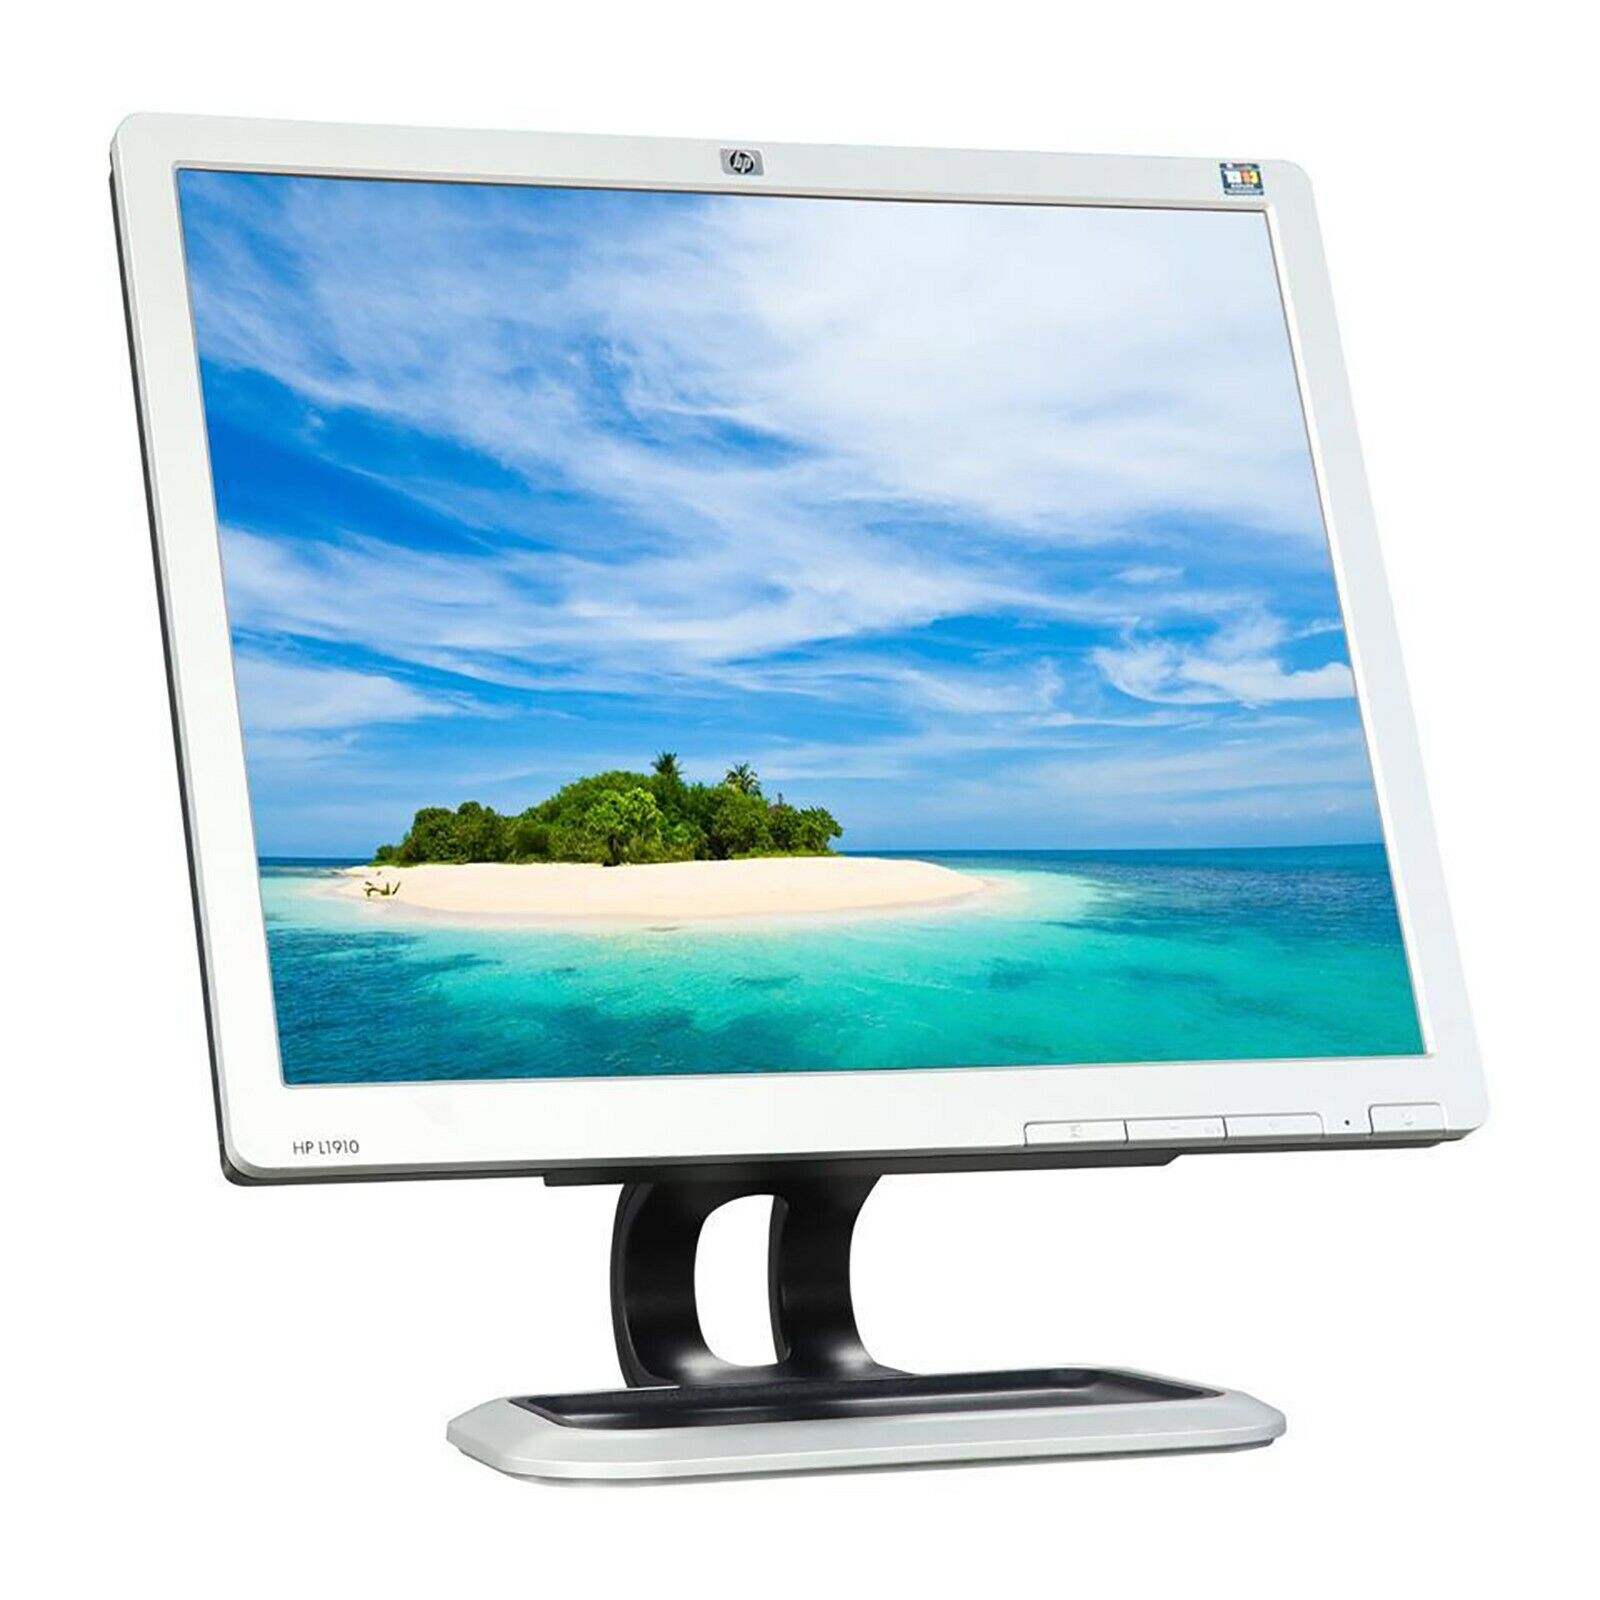 HP L1910 19” SXGA 1280 x 1024 Flat Panel TFT LCD Monitor 800:1 VGA 60 Hz Grade A